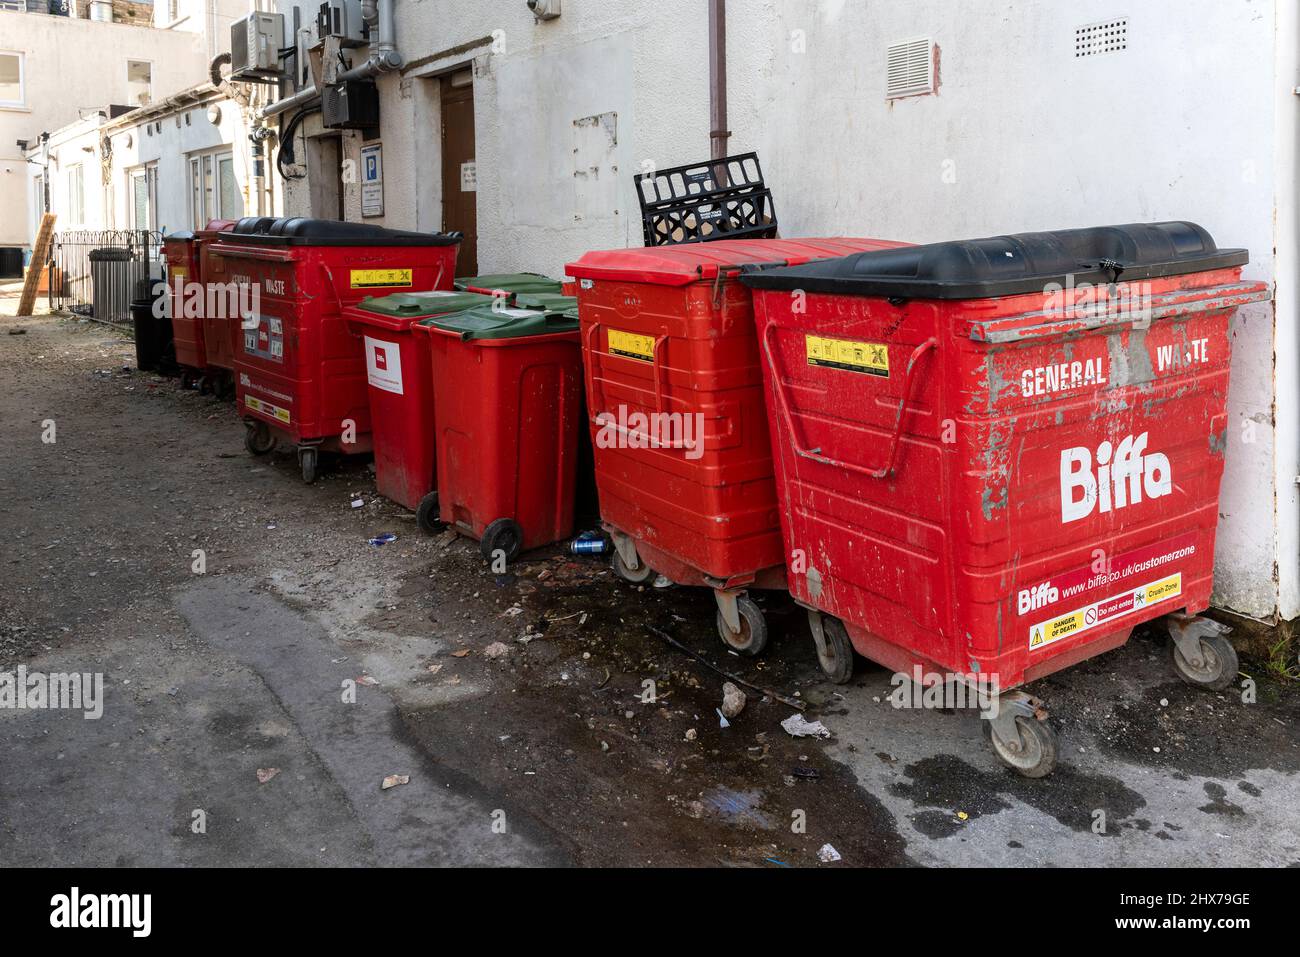 Biffa general waste disposal wheelie bins in a back street in Newquay in Cornwall. Stock Photo